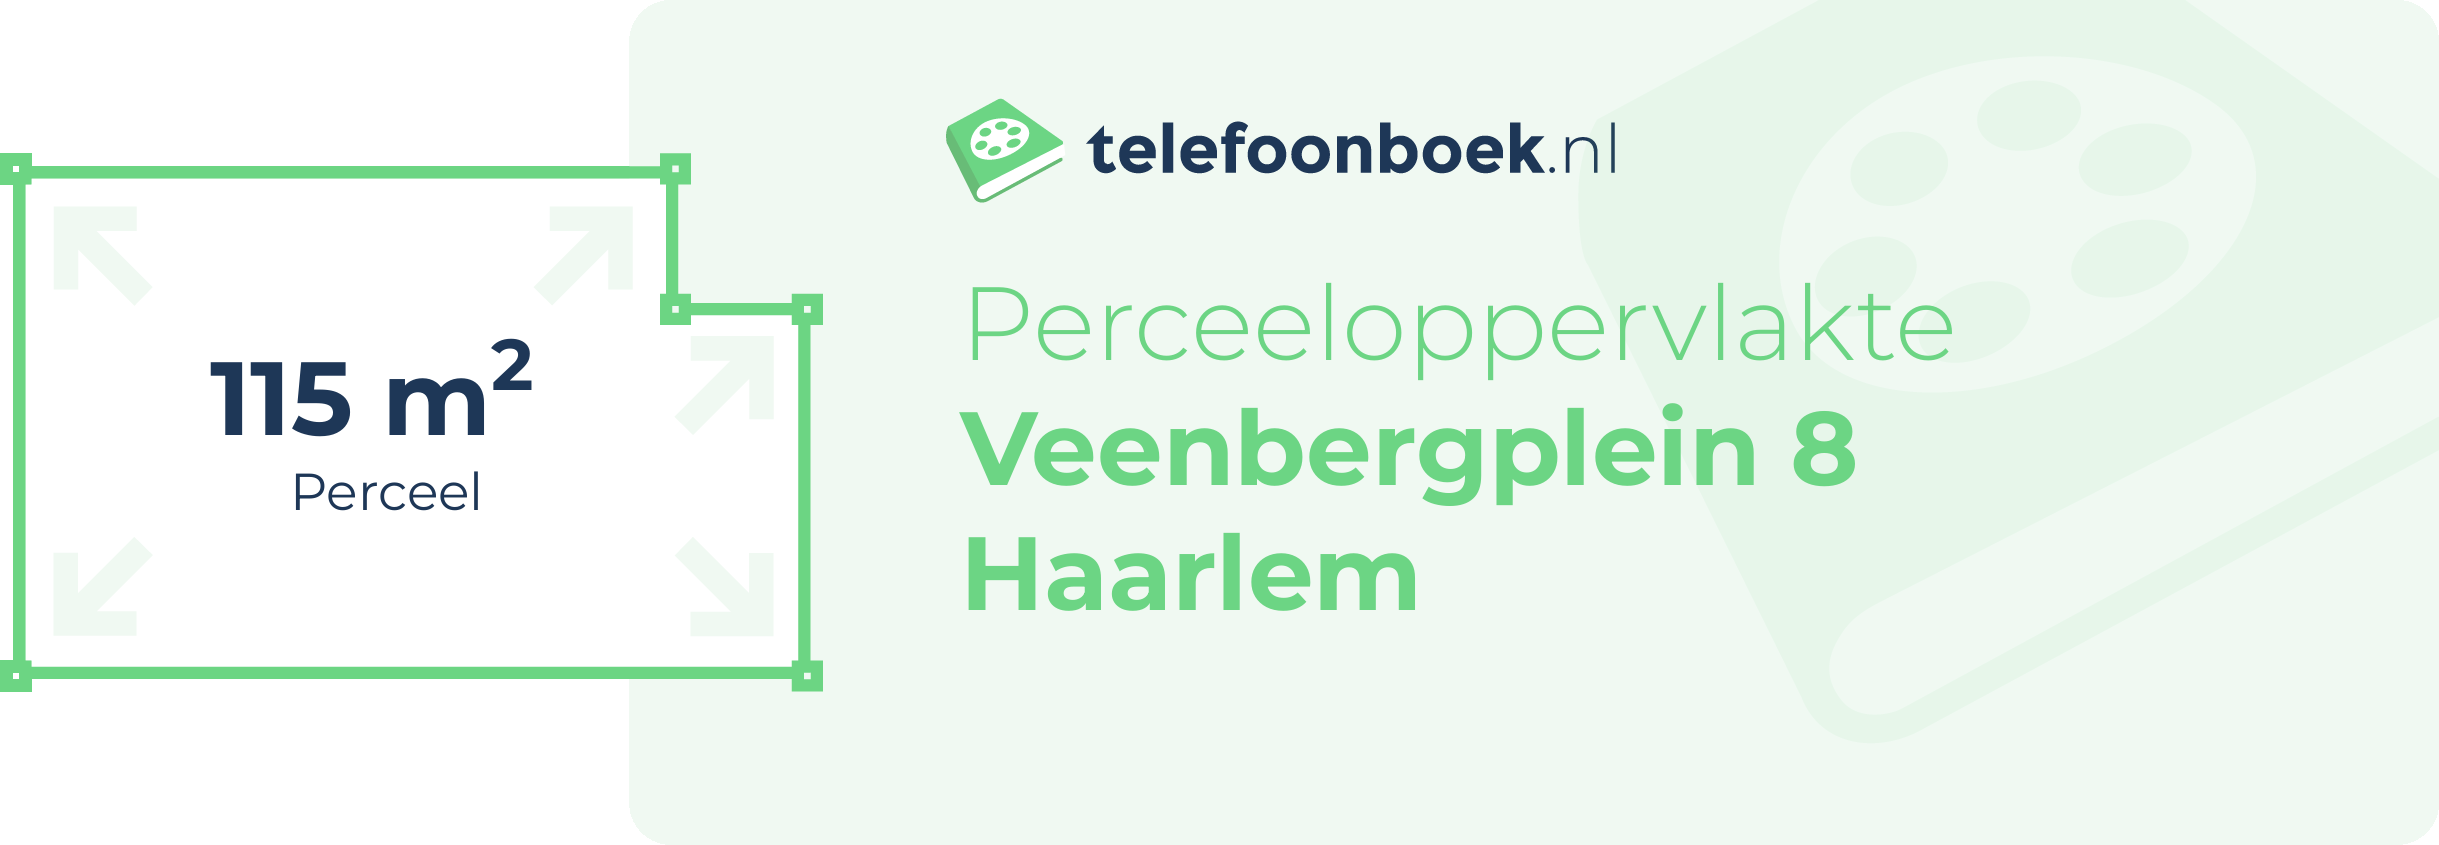 Perceeloppervlakte Veenbergplein 8 Haarlem